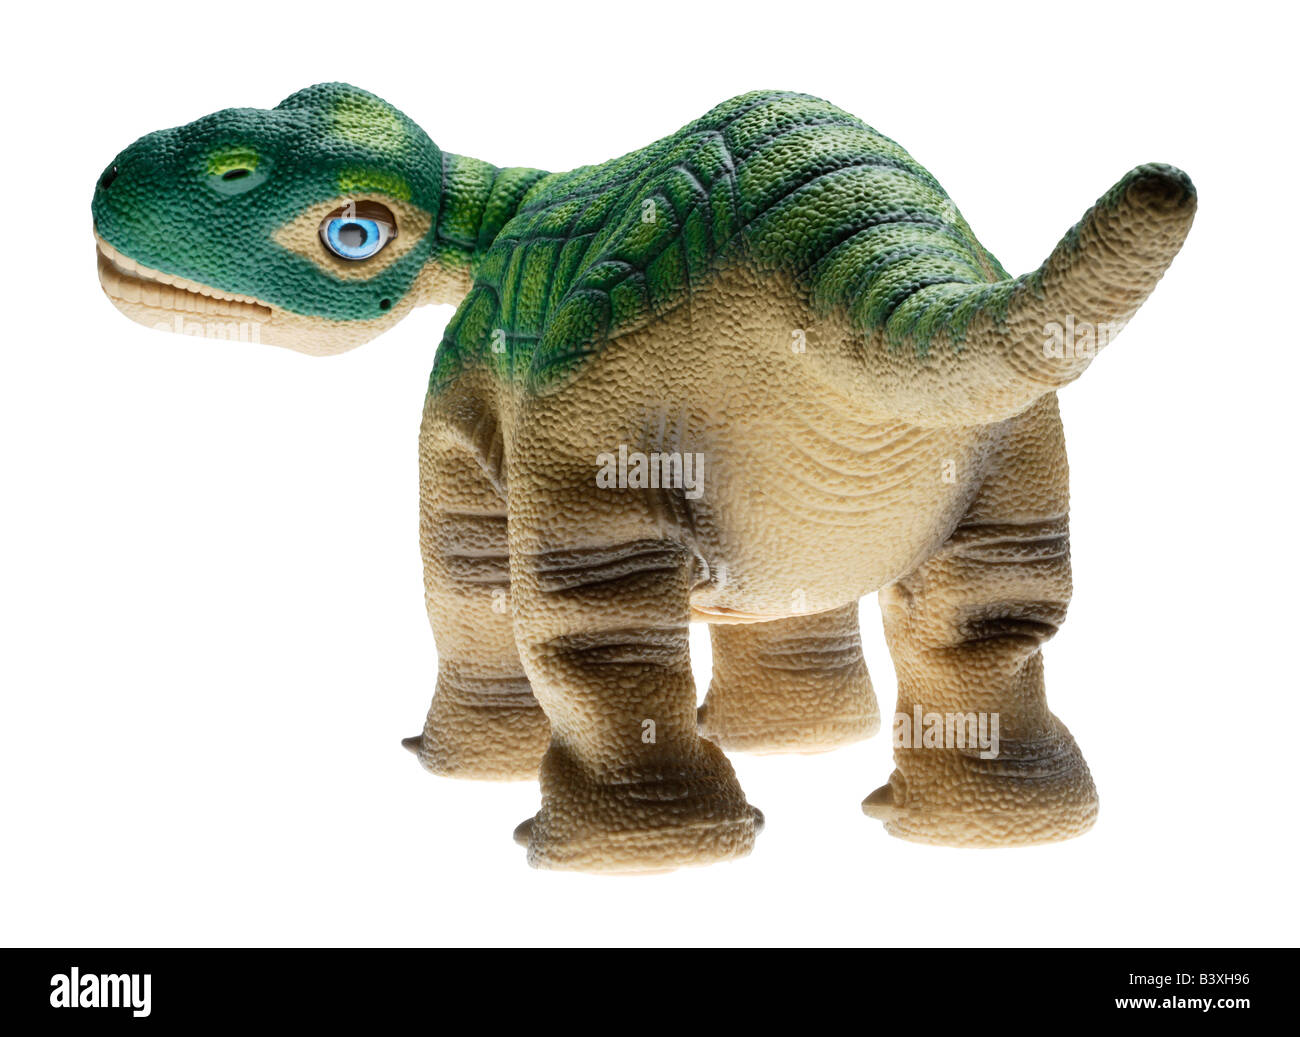 Spielzeug Dinosaurier-Roboter-Haustier Pleo Stockfotografie - Alamy